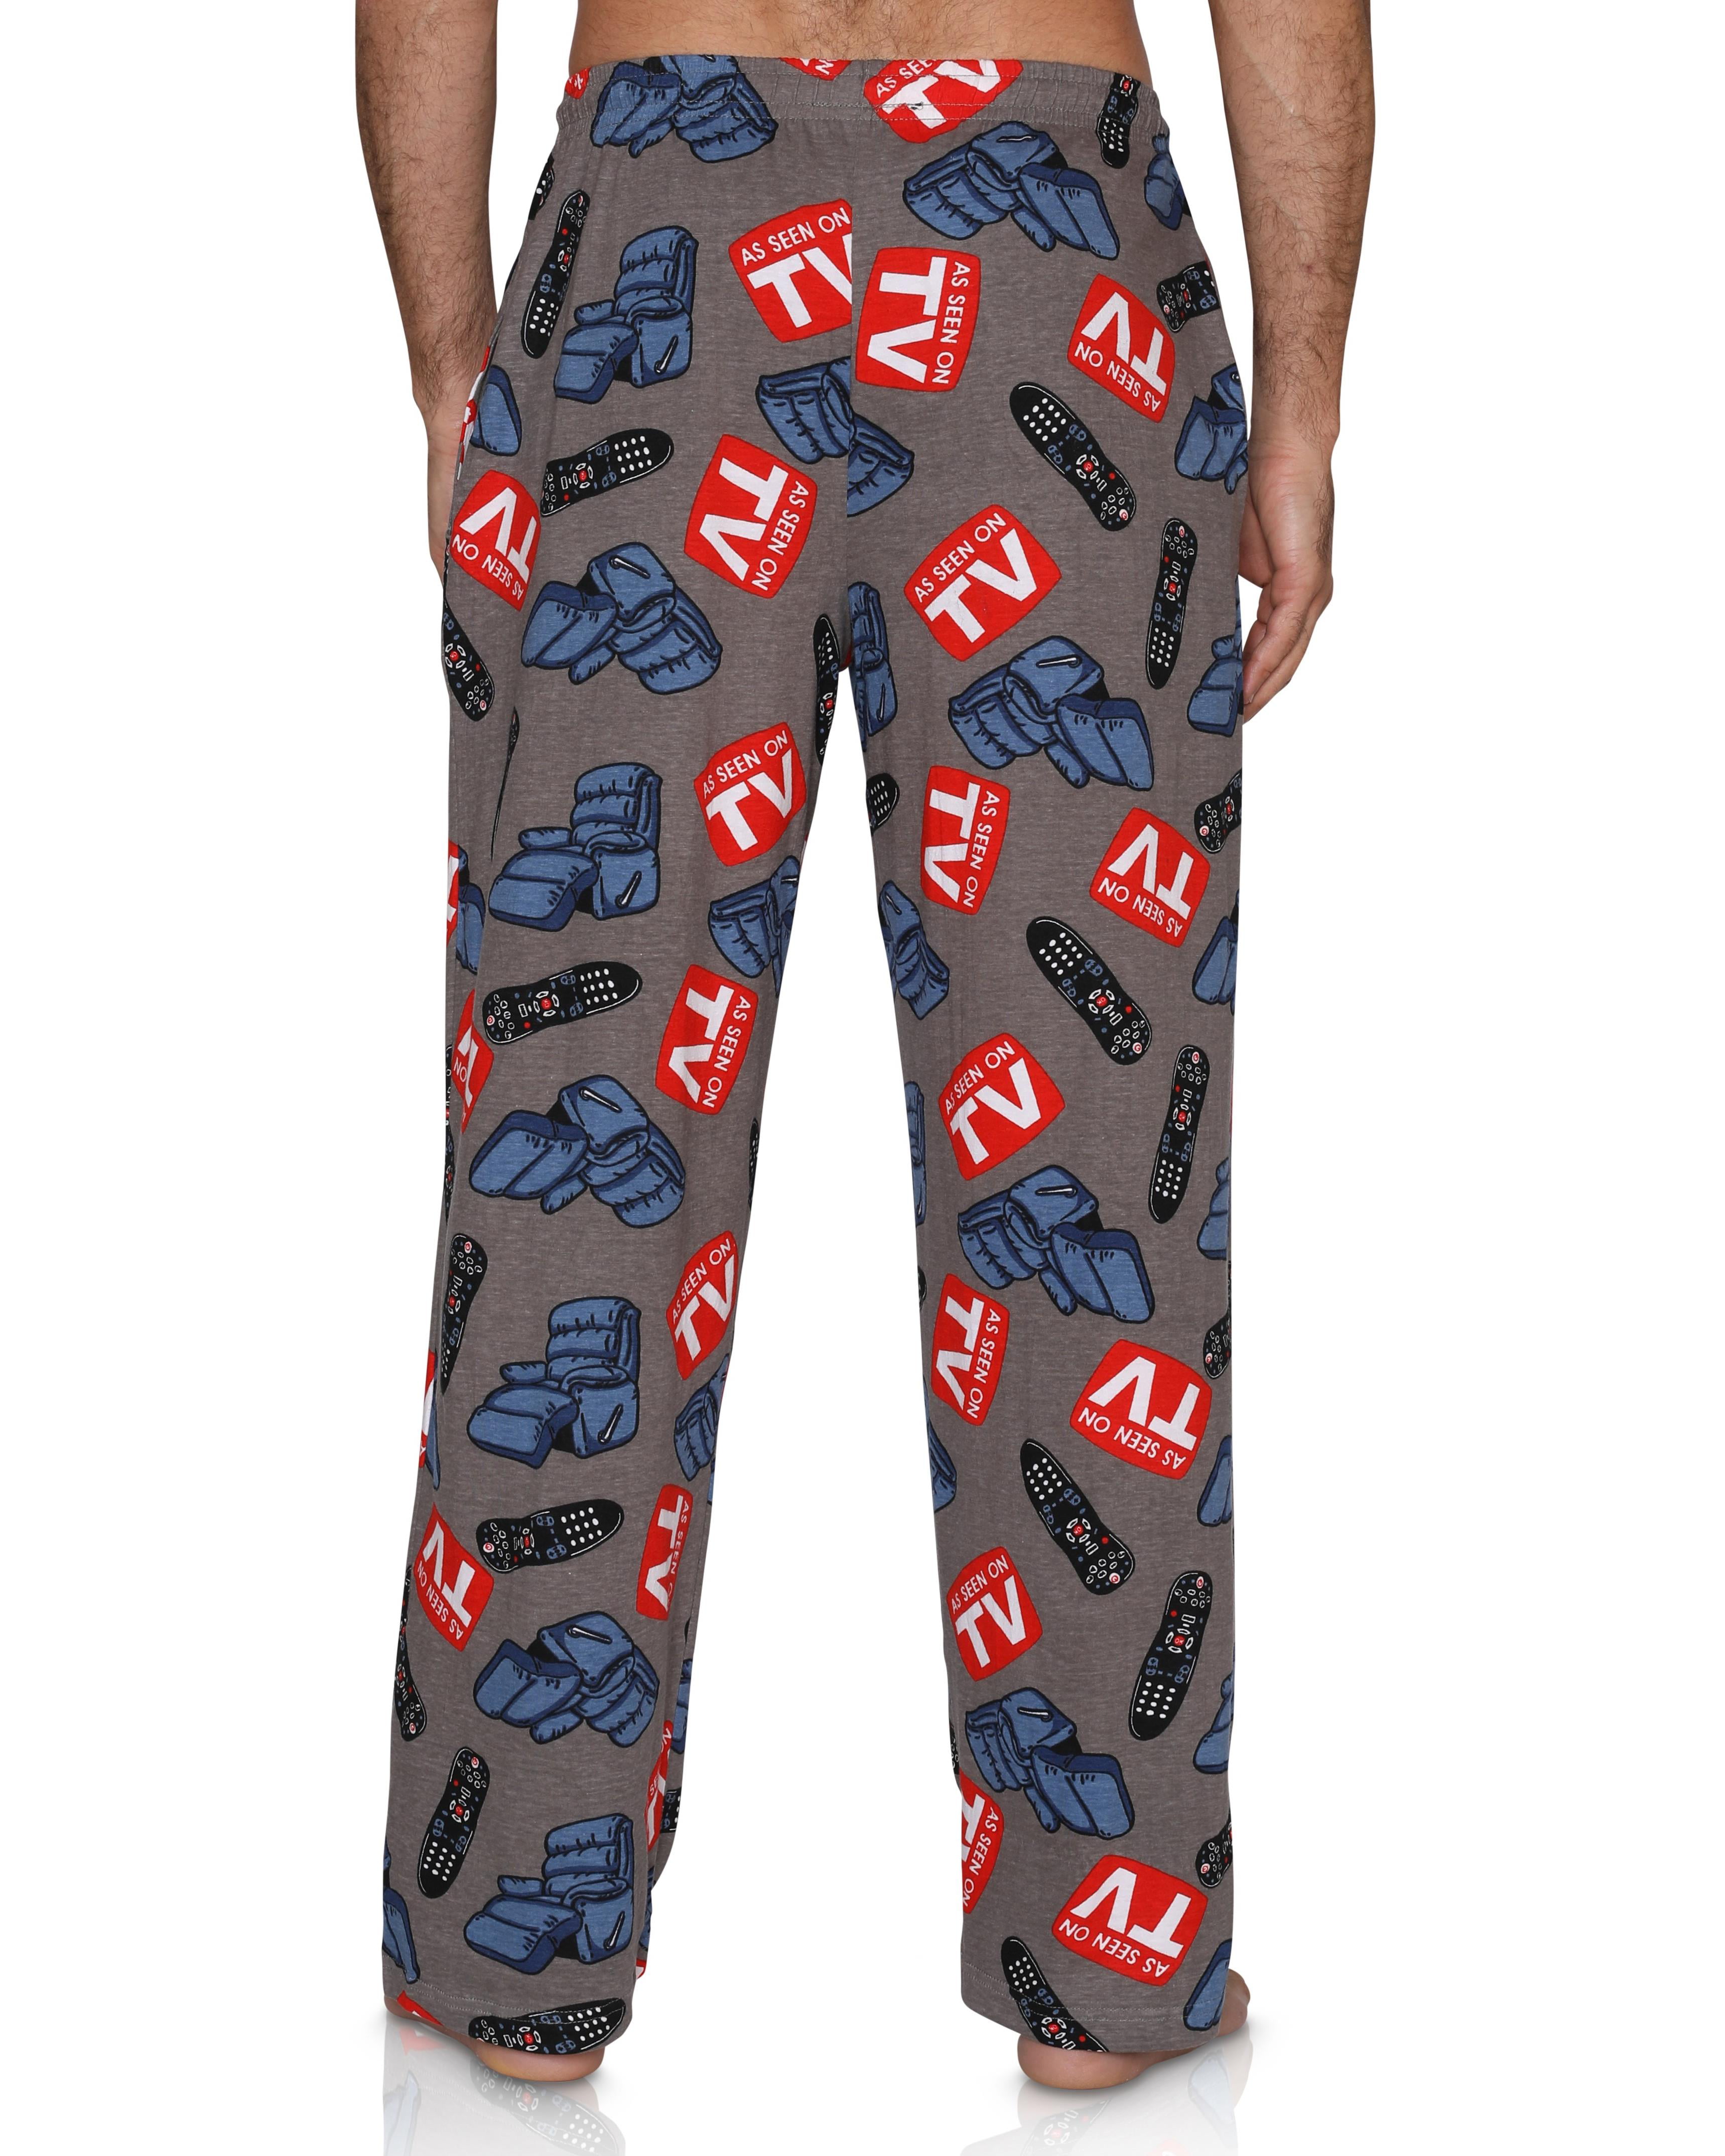 Men's Fun Lounge Pants Boxers Printed Pajama Graphic Pants Loungewear |  Walmart Canada